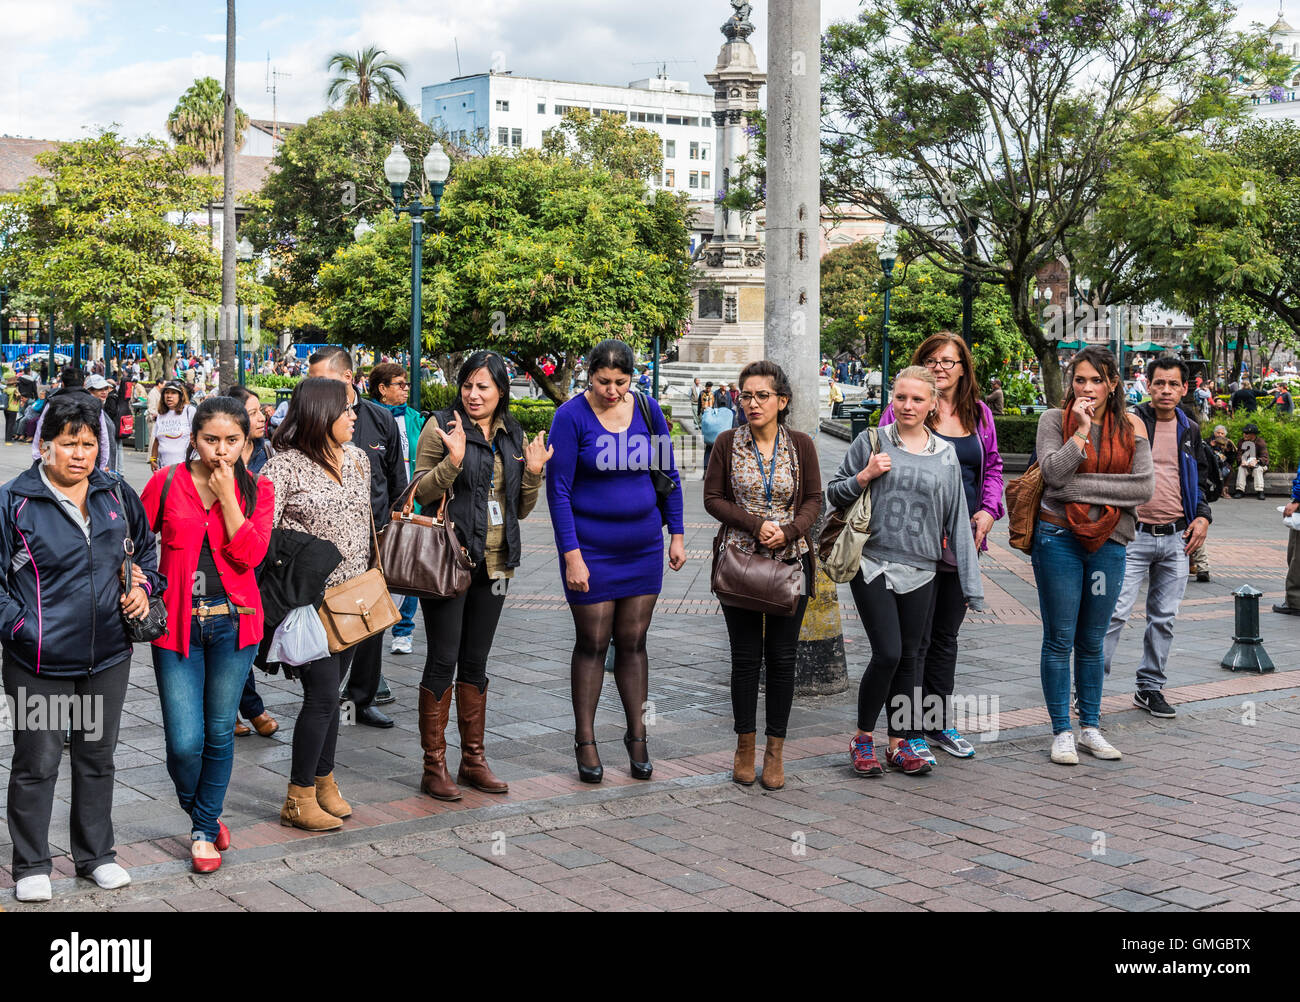 Ladies waiting to cross street in historic old city Quito, Ecuador. Stock Photo